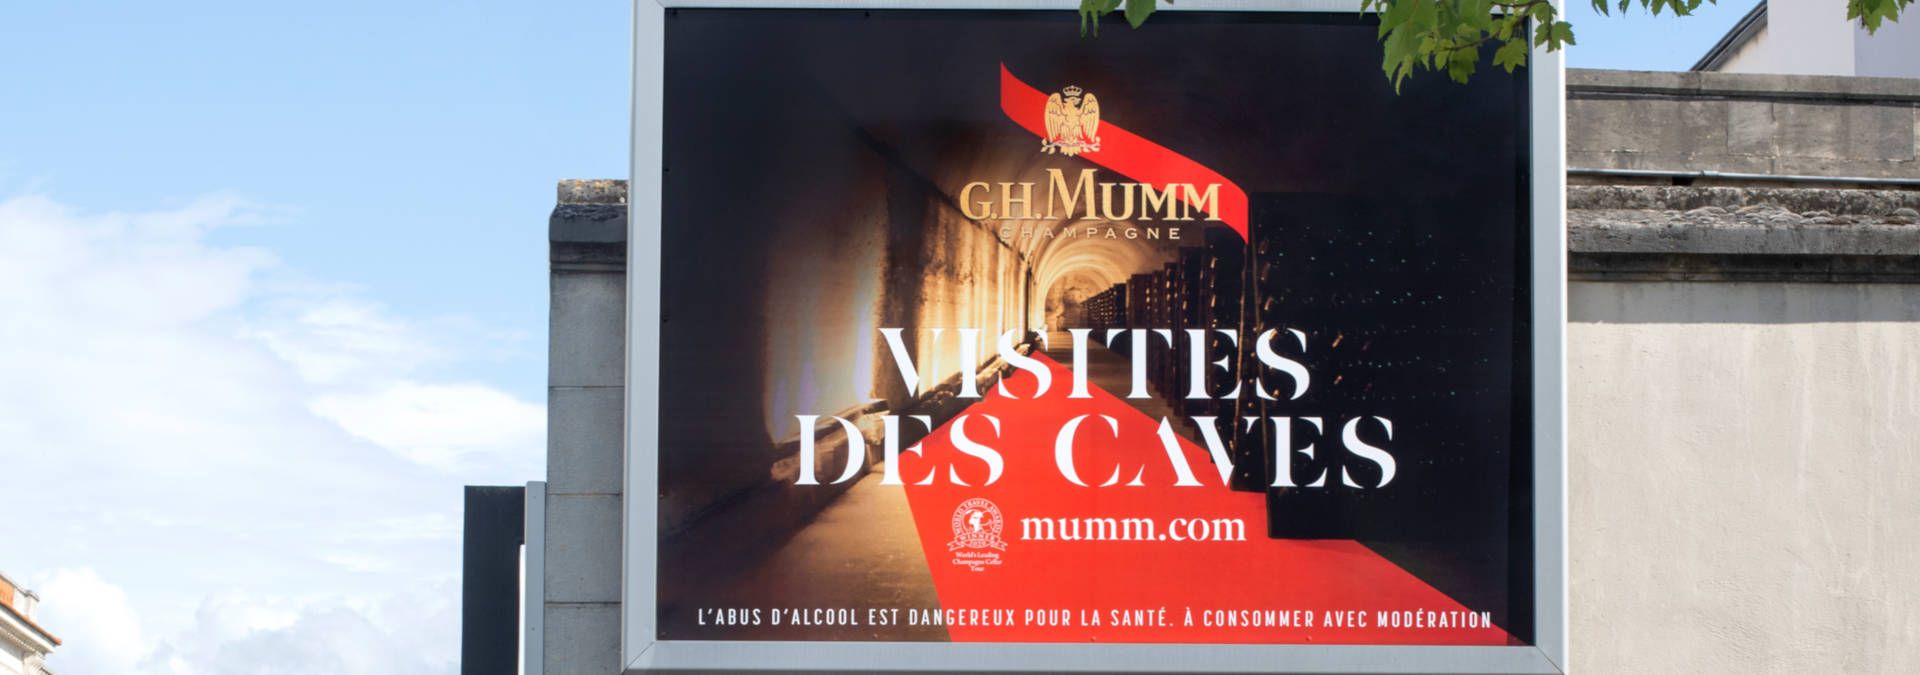 Champagne Mumm - Rue des Vignerons